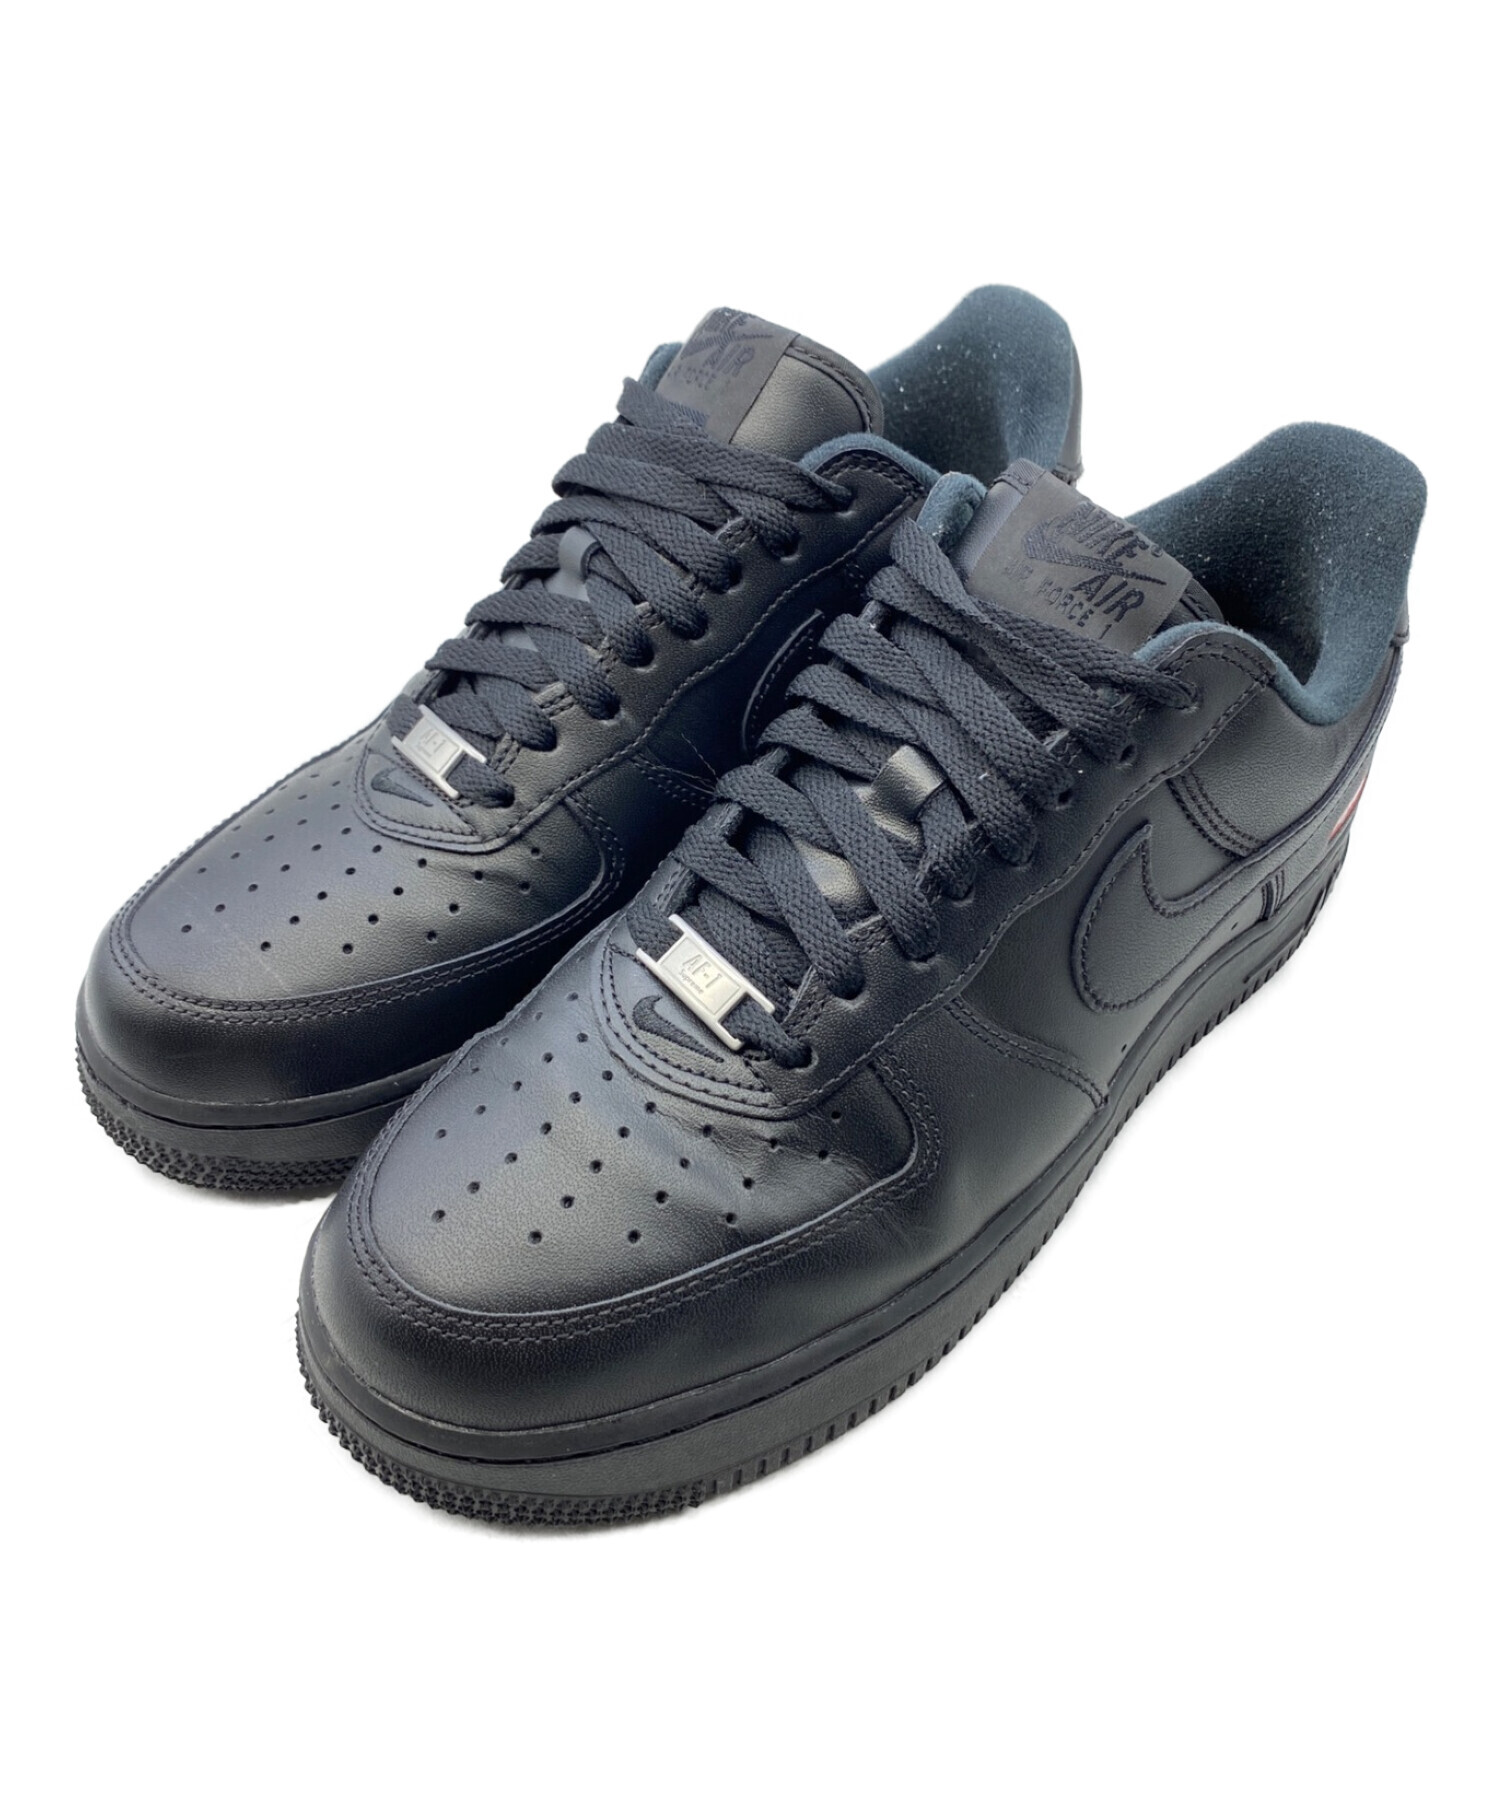 Supreme Nike Air Force 1 Low Black us8.5